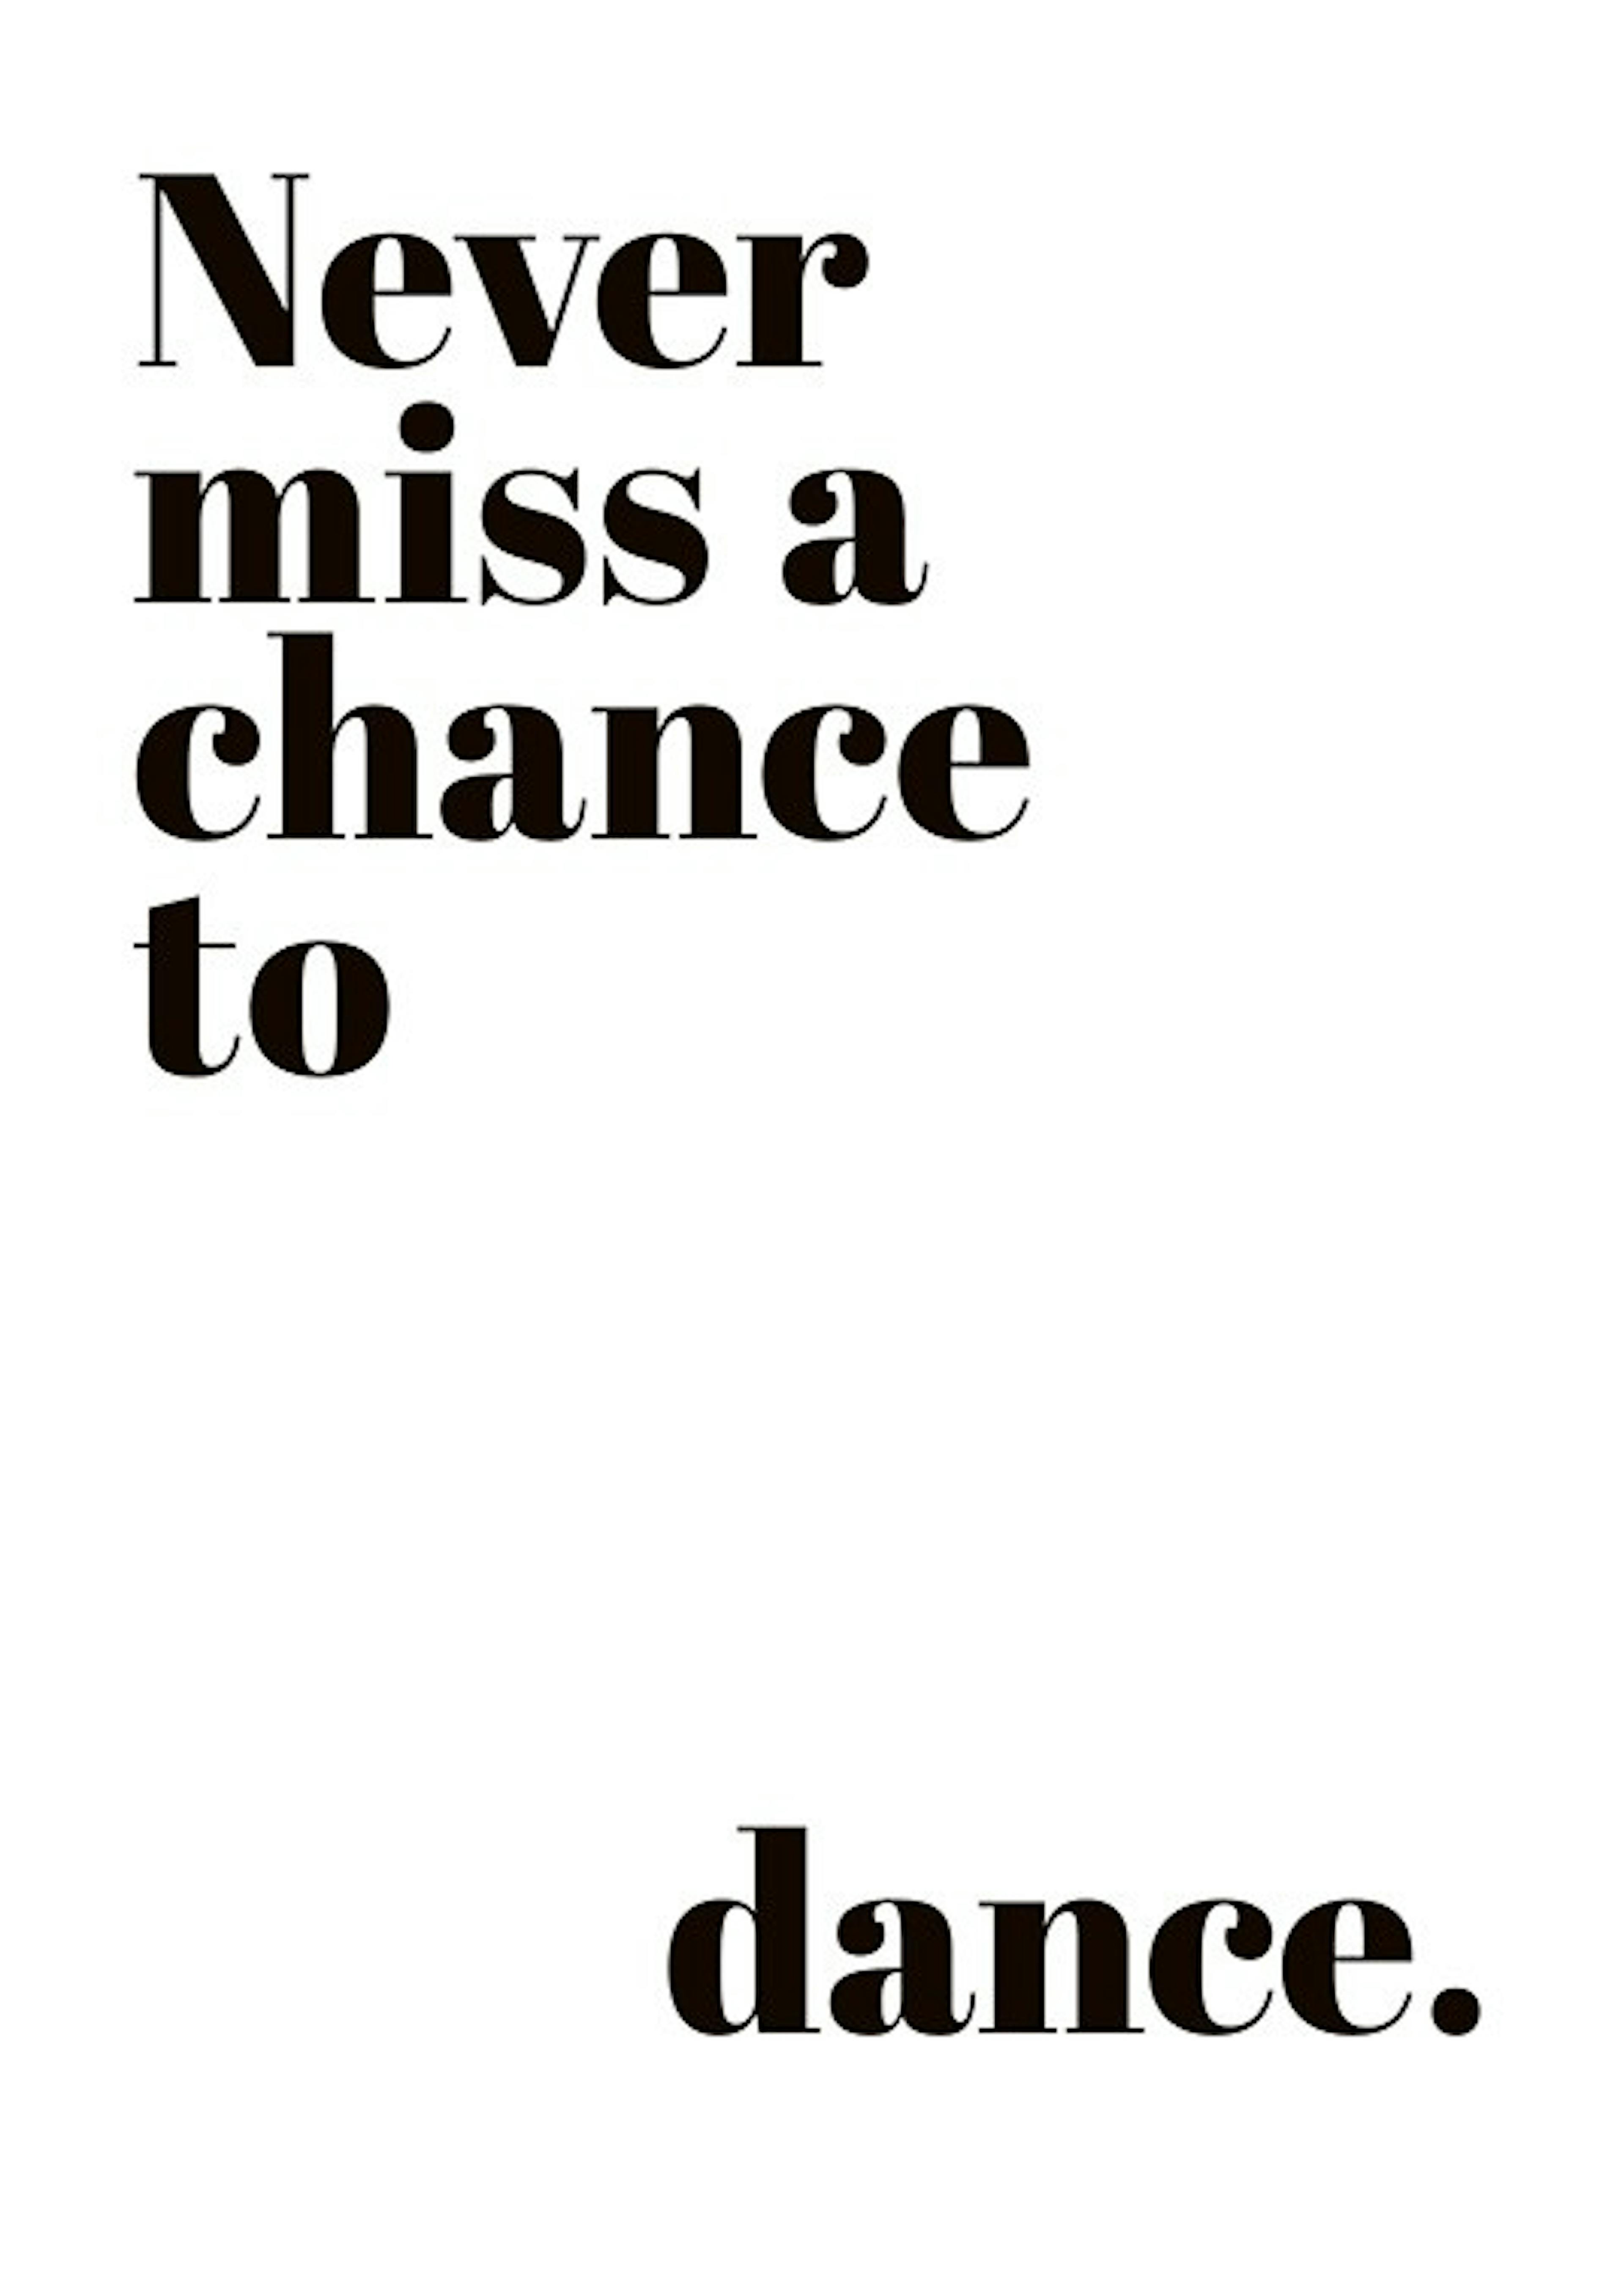 Chance to Dance Print 0